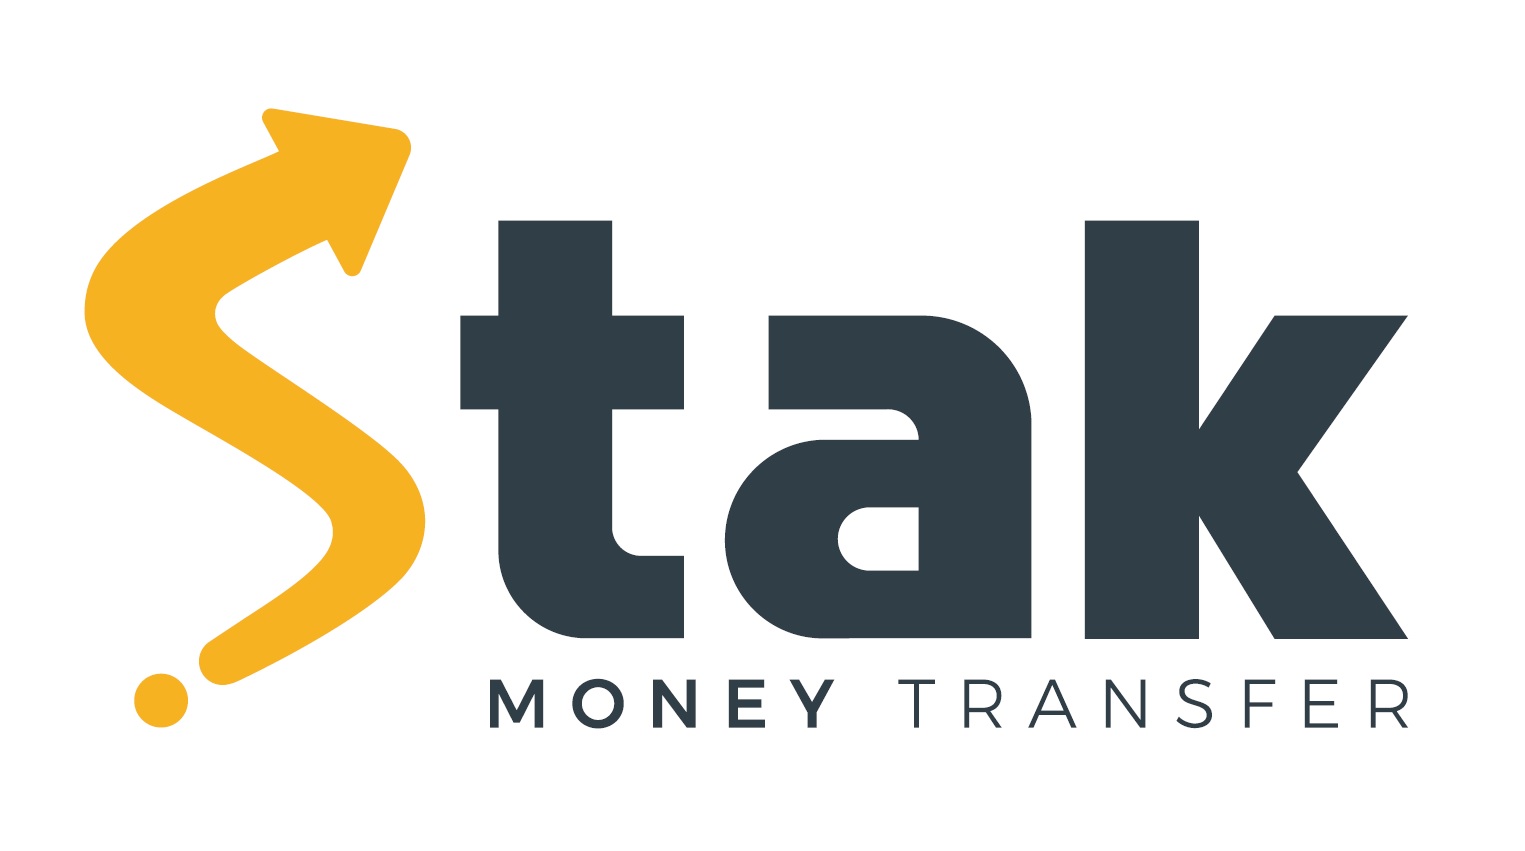 Stak Money Transfer